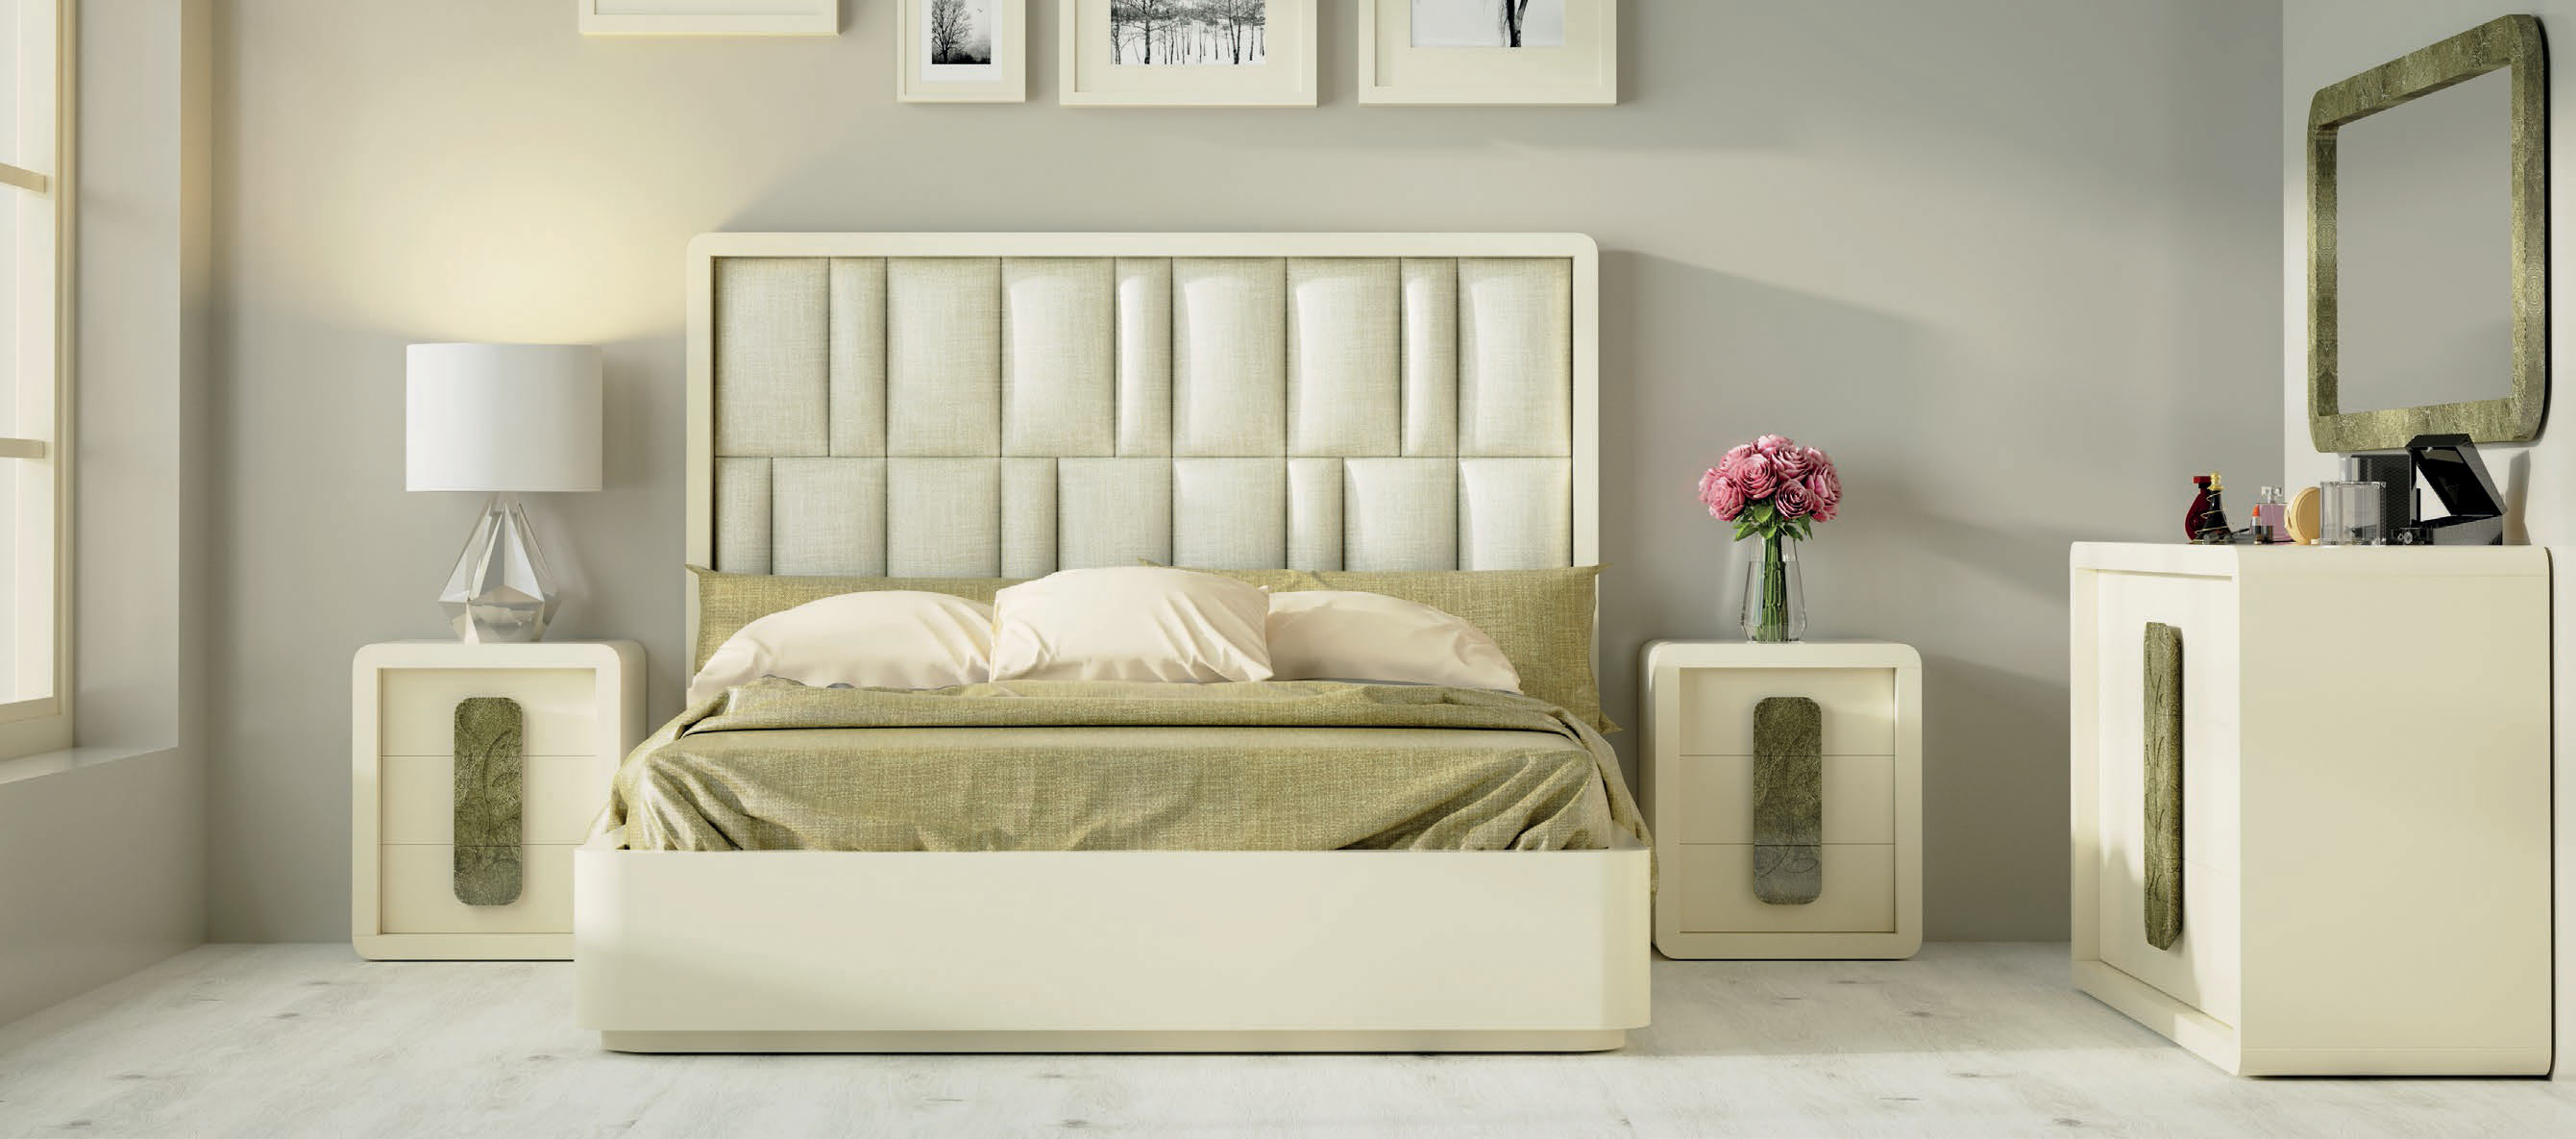 Brands Franco Furniture Bedrooms vol1, Spain DOR 169